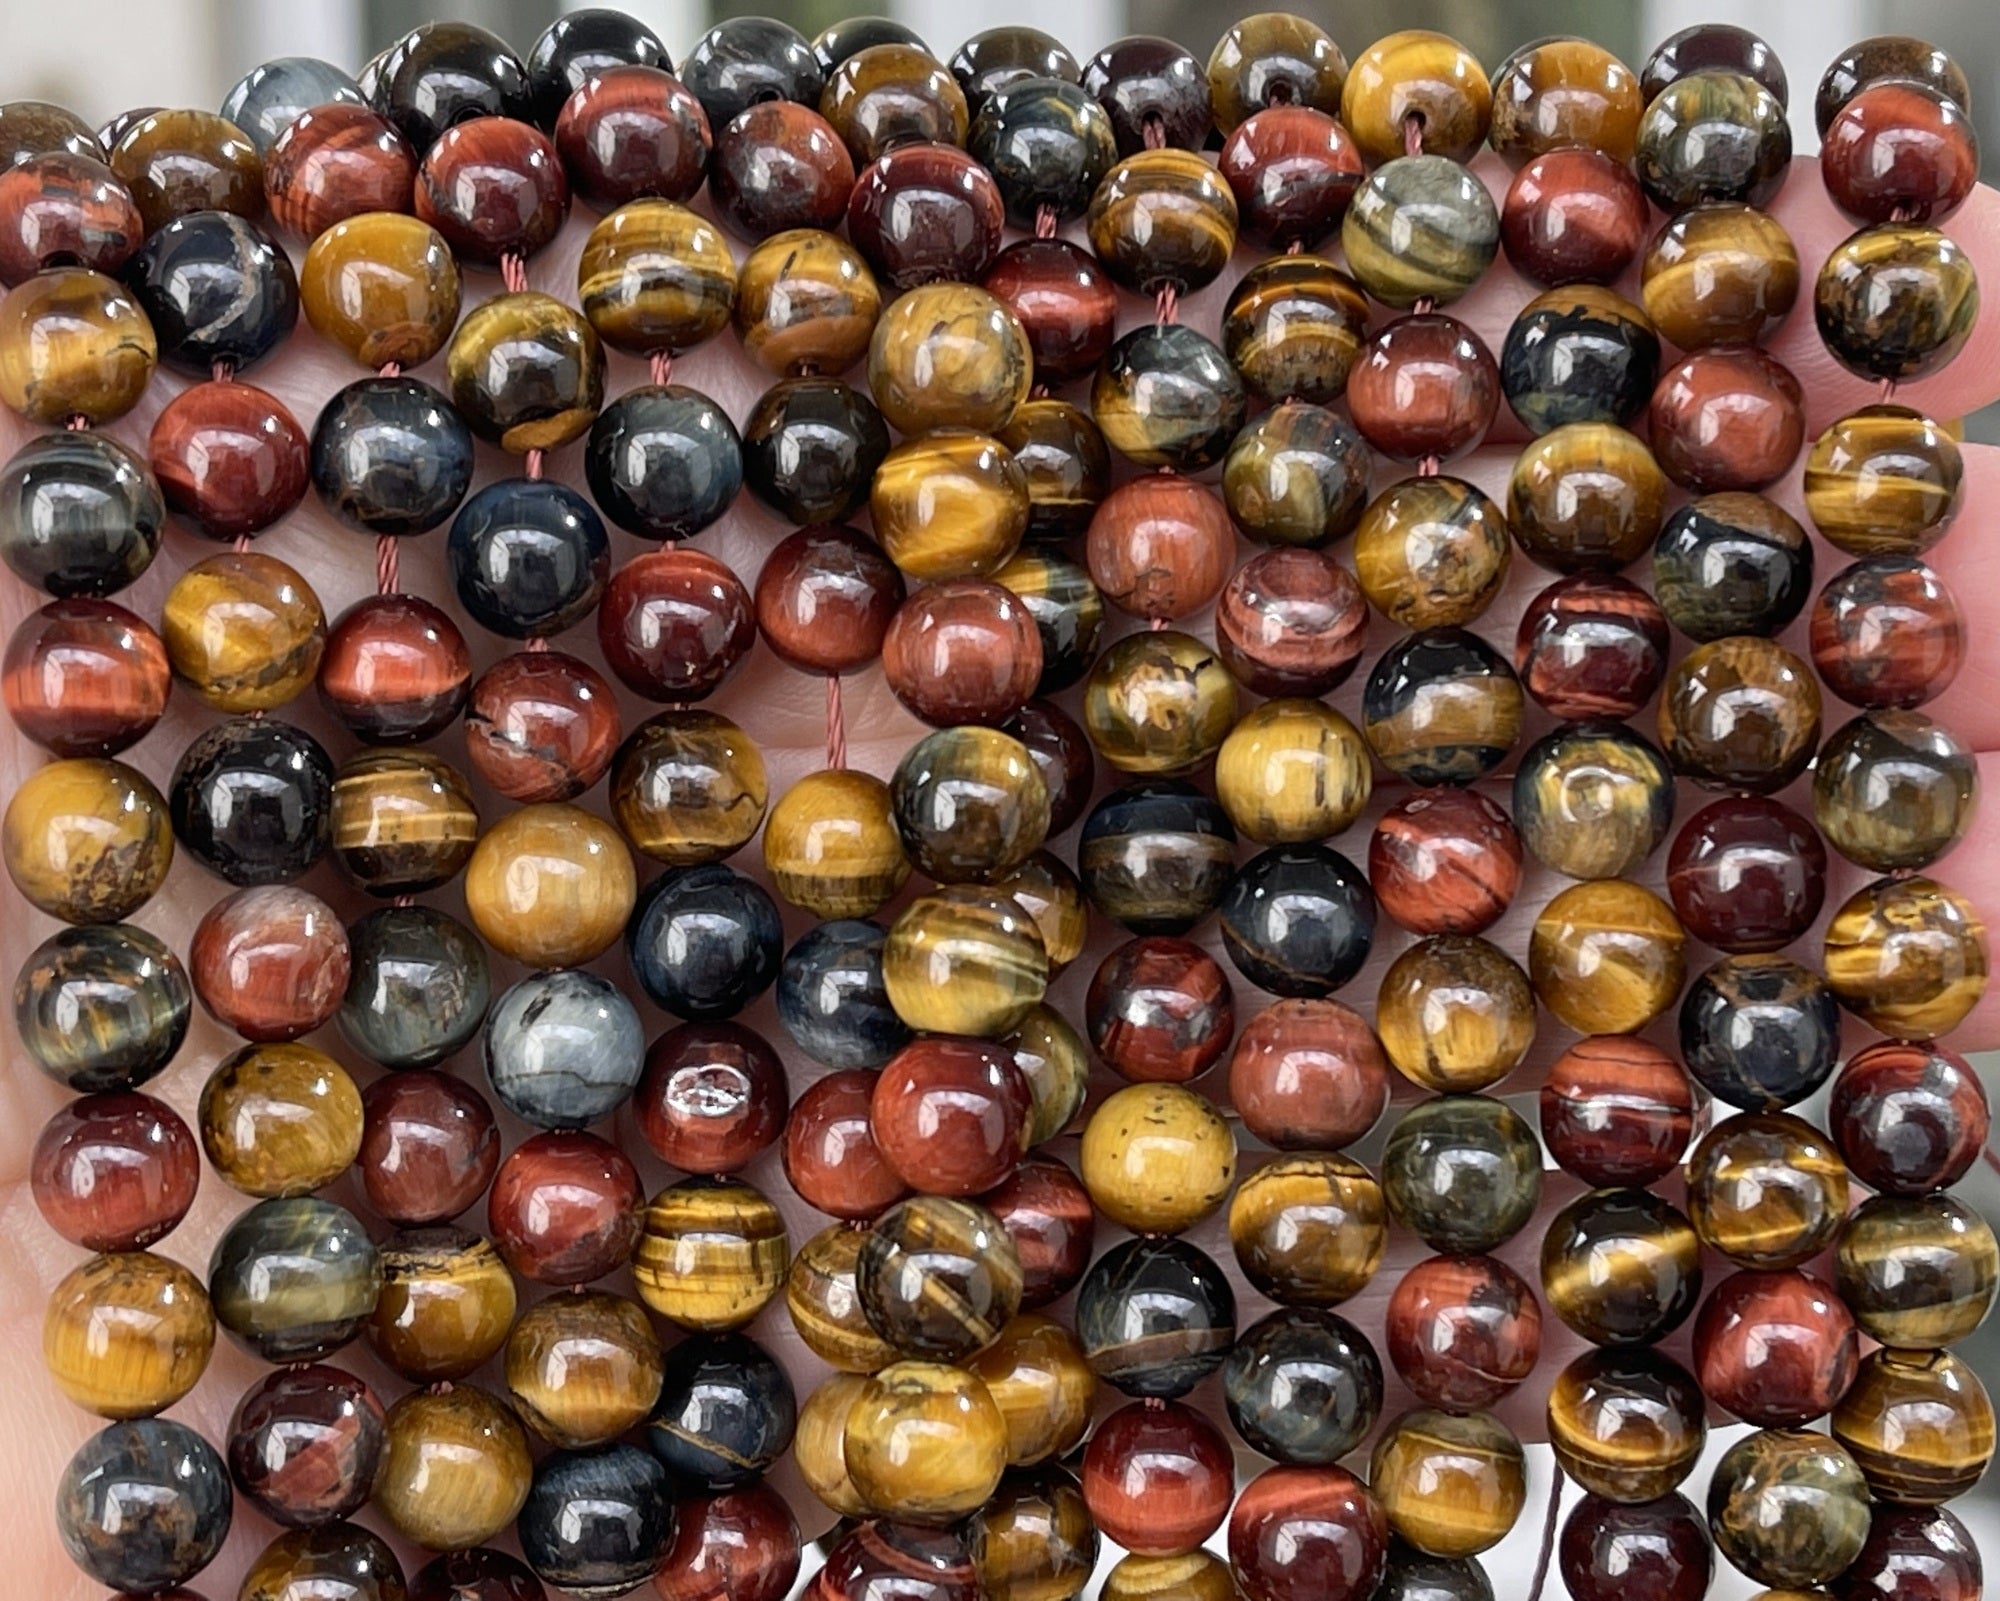 Tiger Eye mix color 8mm round polished gemstone beads 15.5" strand - Oz Beads 